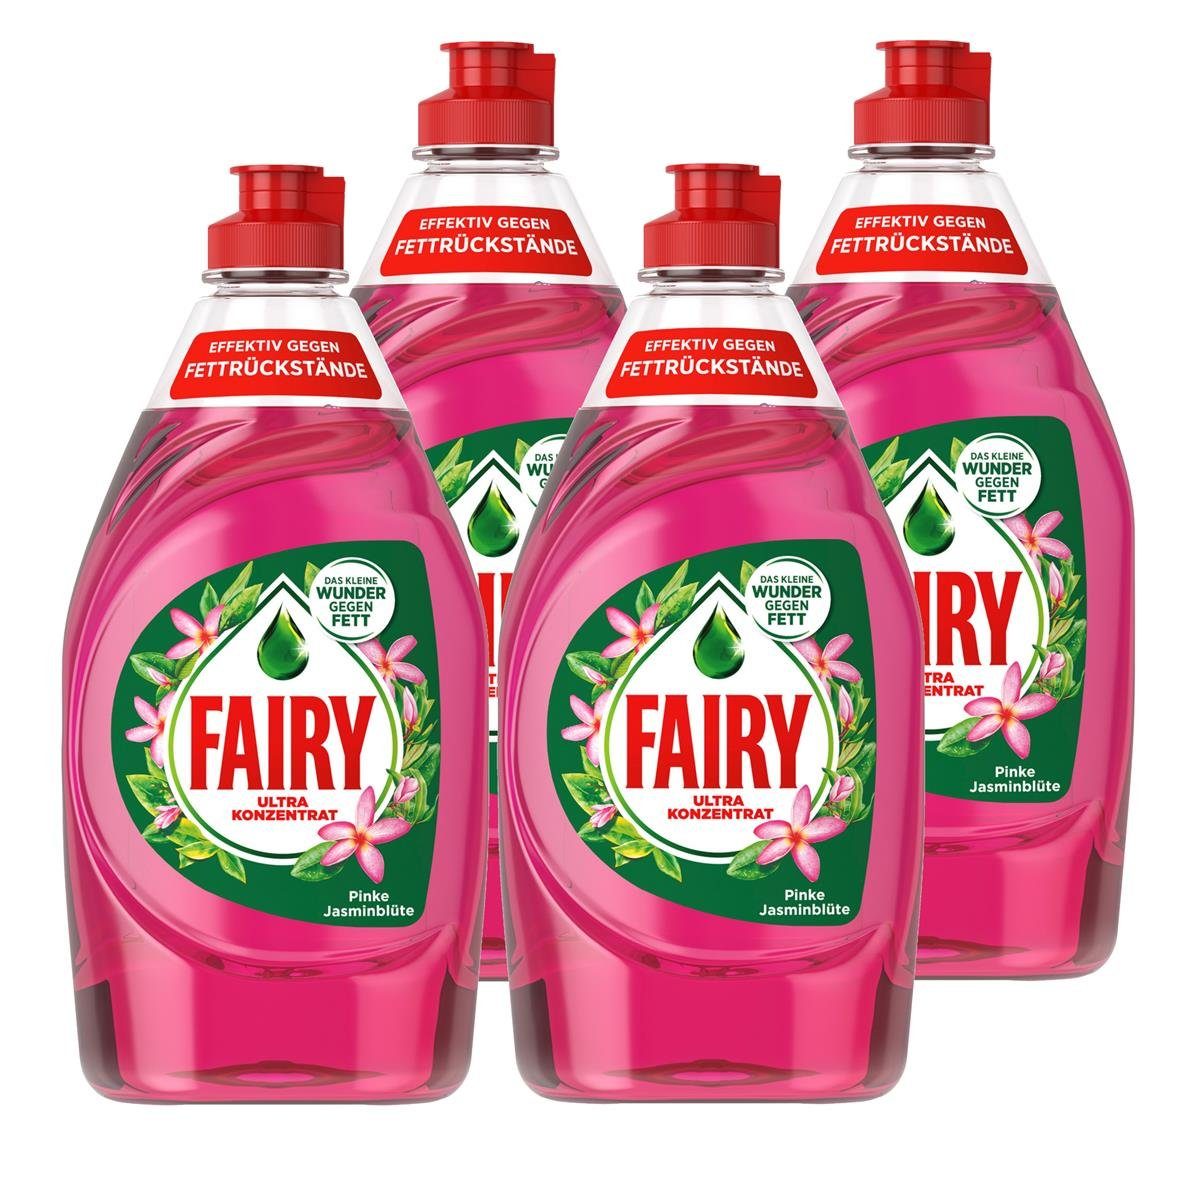 Fairy Fairy Spülmittel Ultra Konzentrat Pinke Jasminblüte 450ml gegen Fett (Geschirrspülmittel